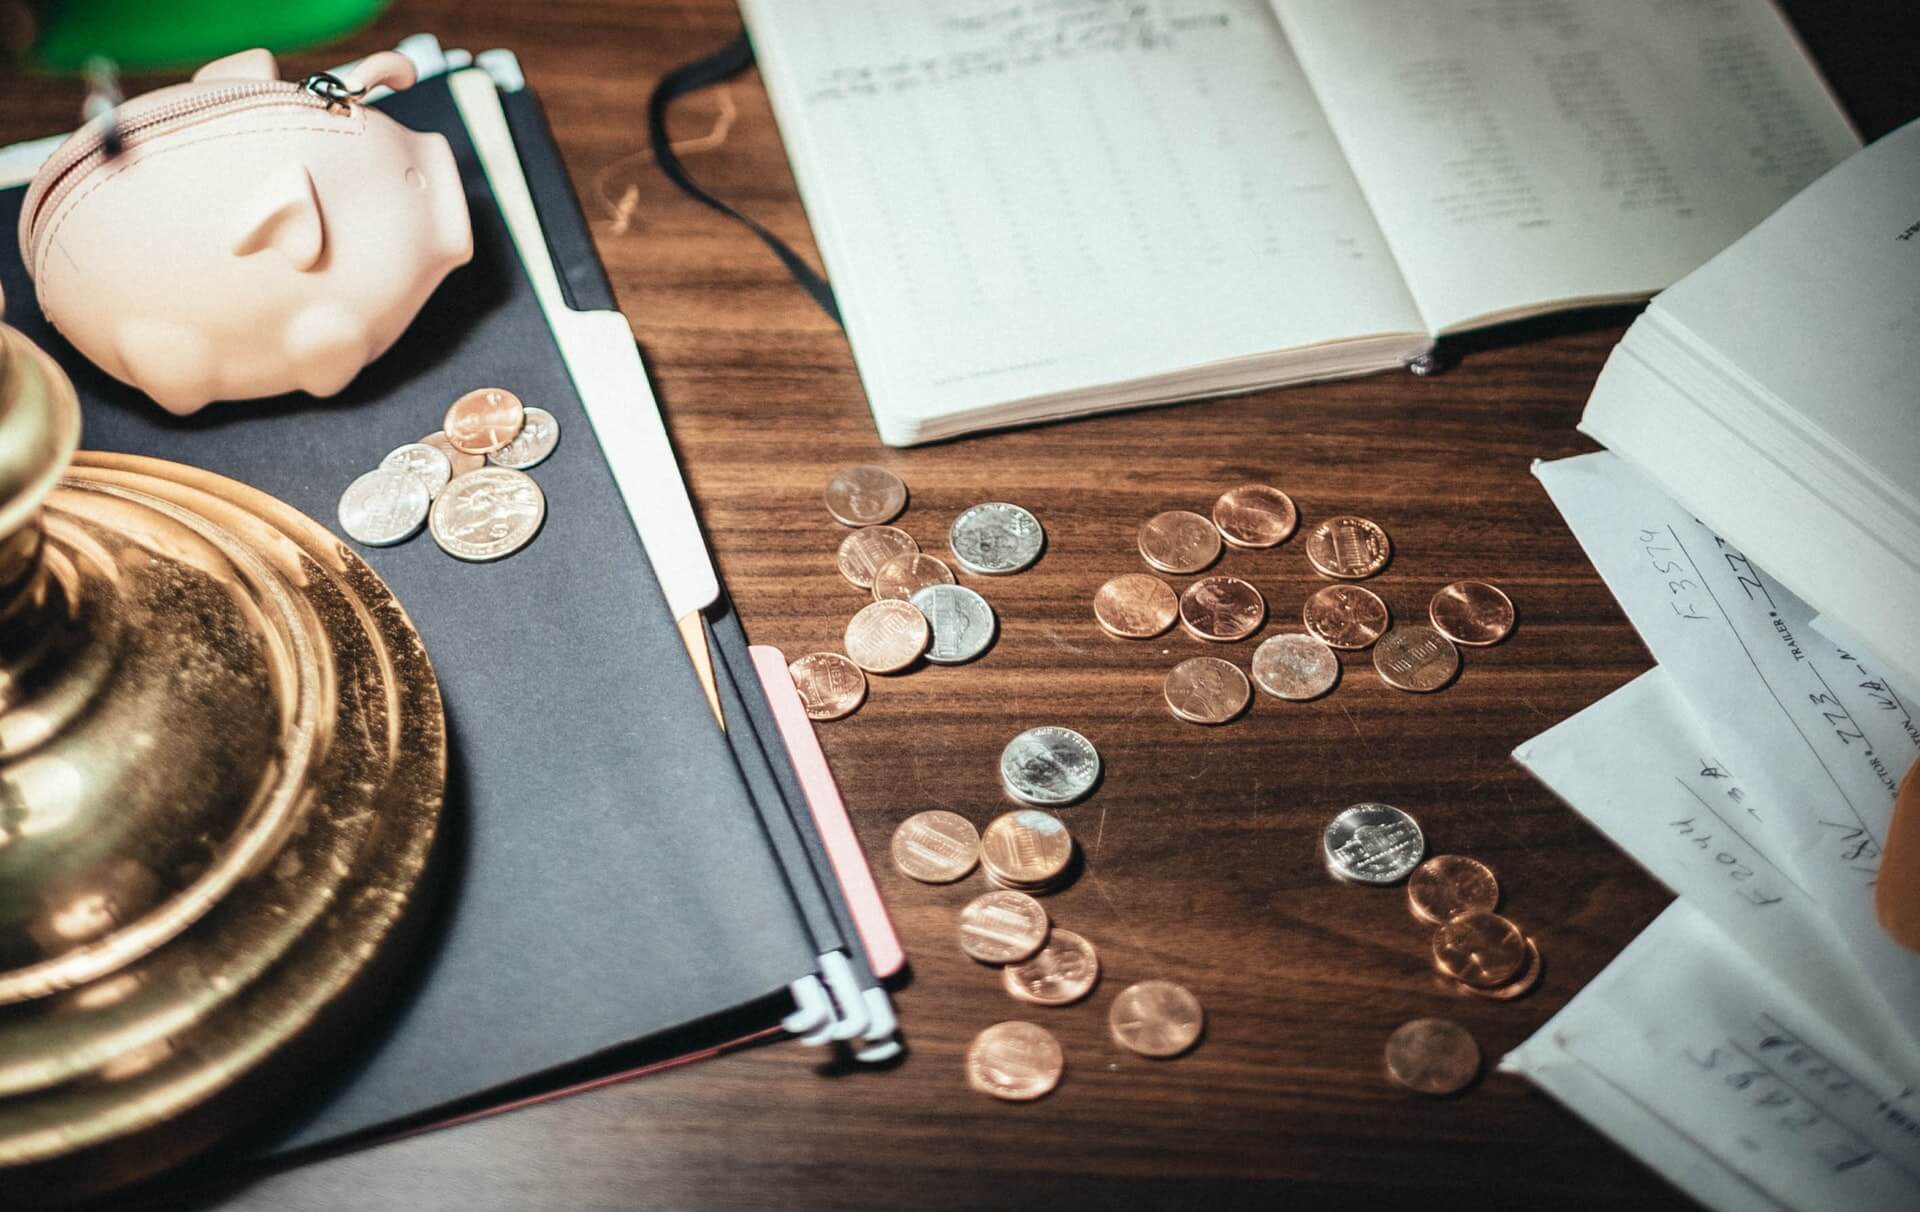 Coins scattered on a desk